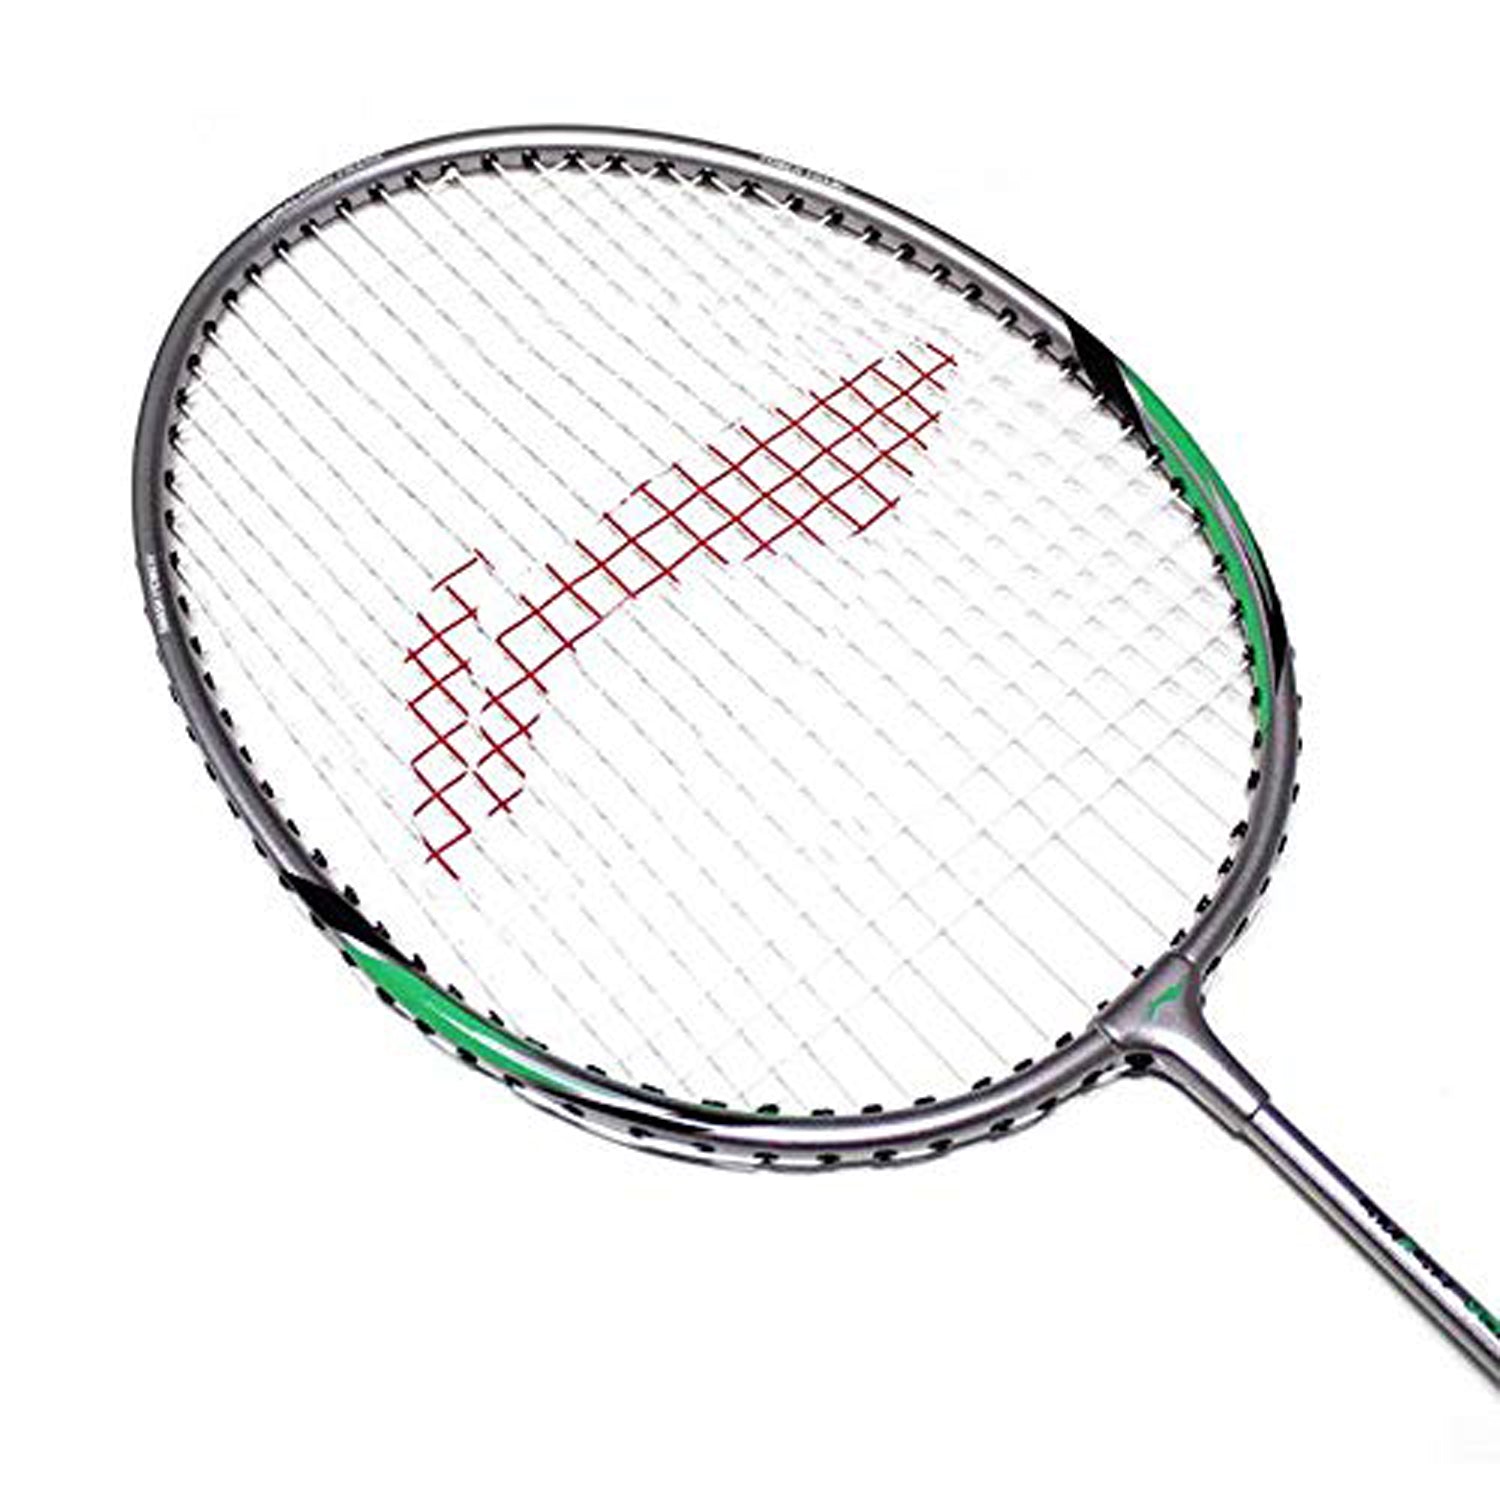 Li-Ning XP80 IV Strung Badminton Racquet, Grey/Green - Best Price online Prokicksports.com